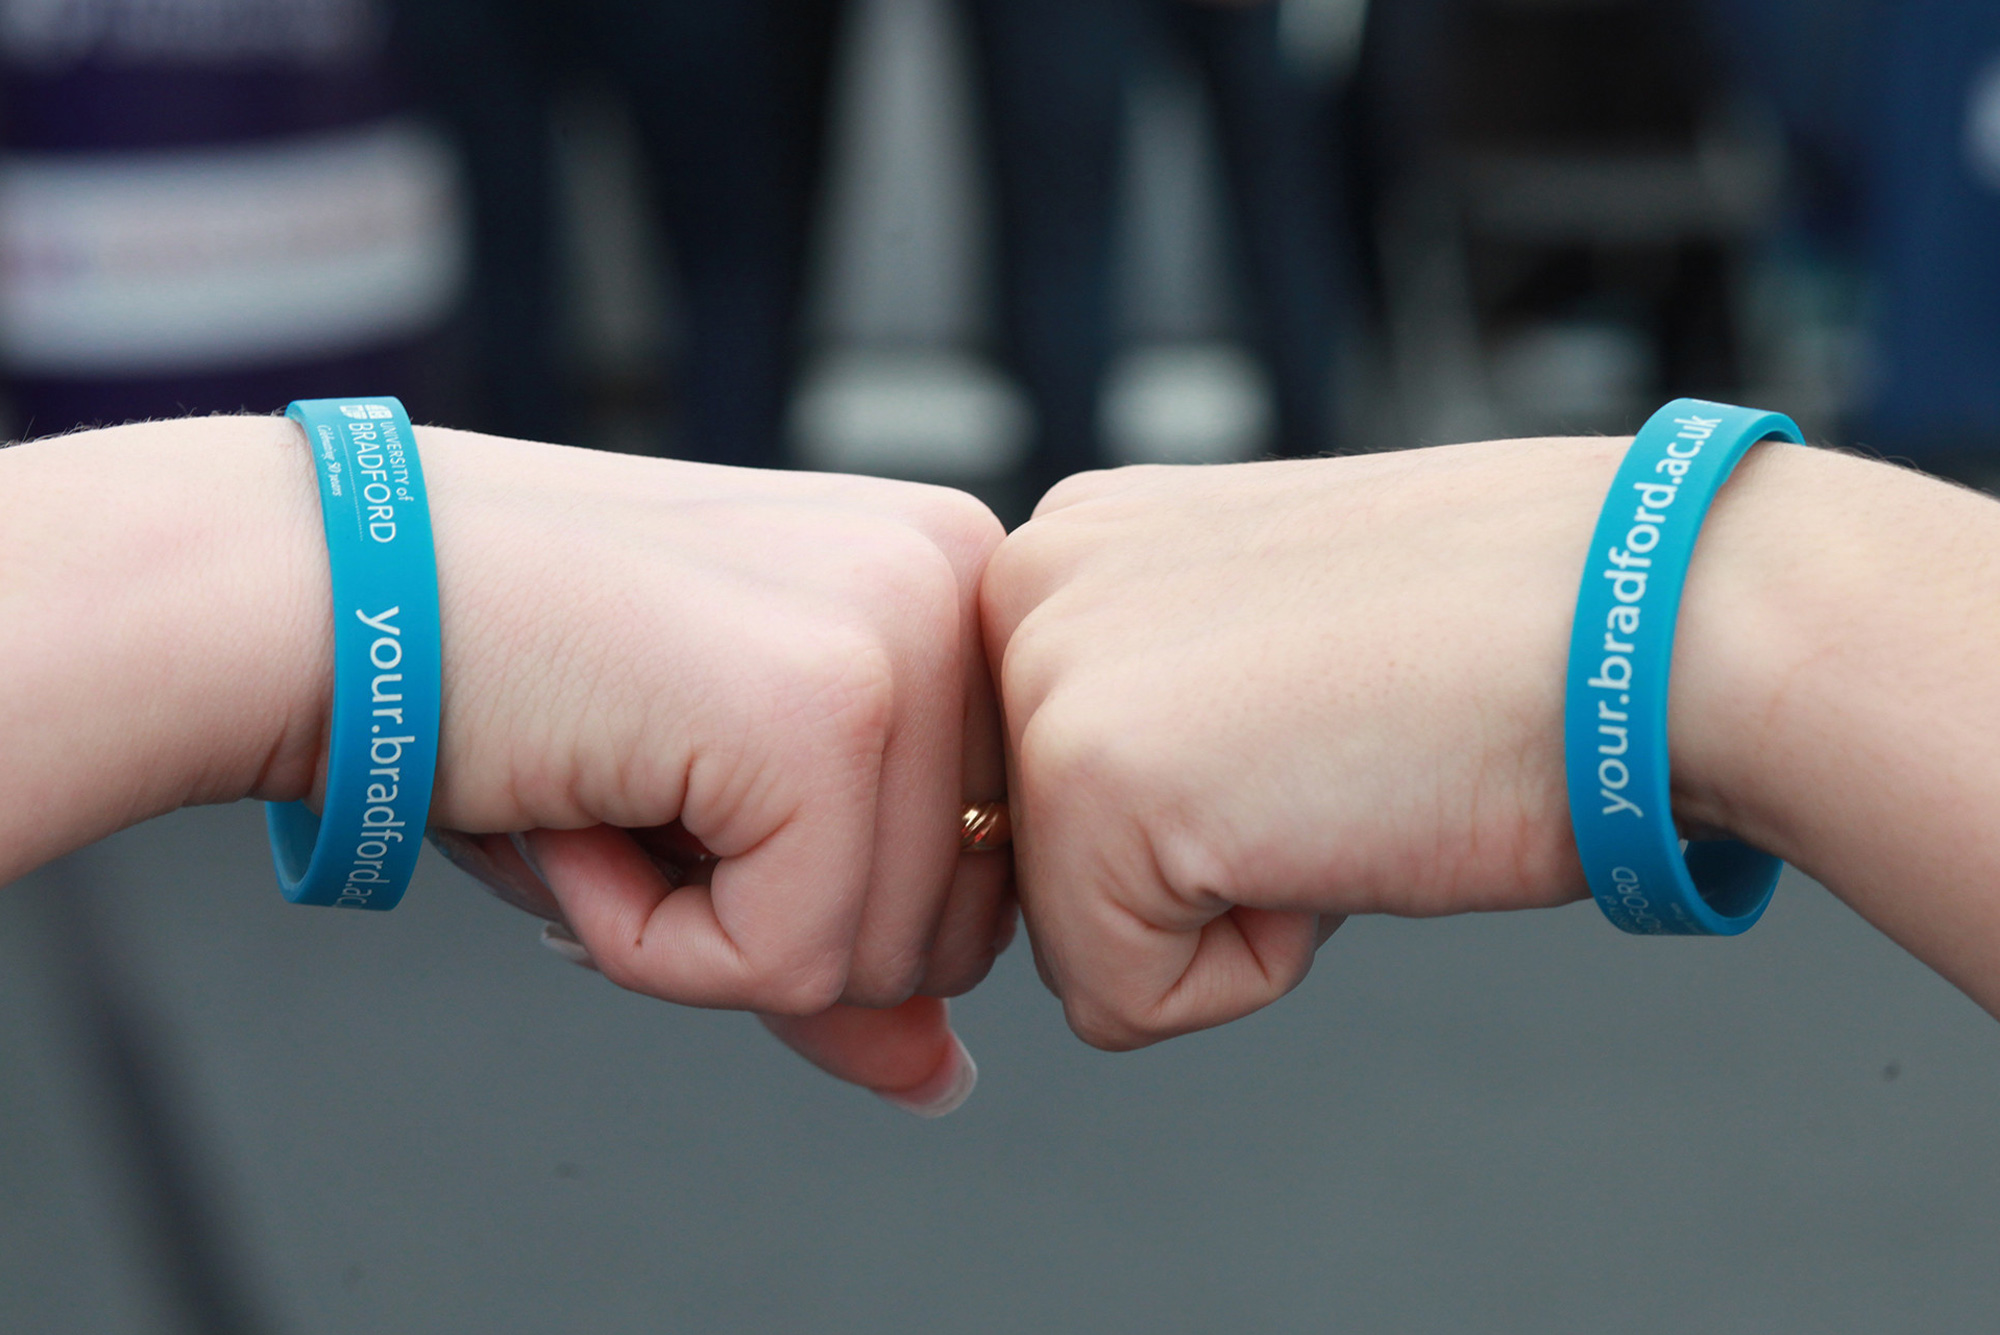 Two people touching fists wearing University of Bradford wristbands